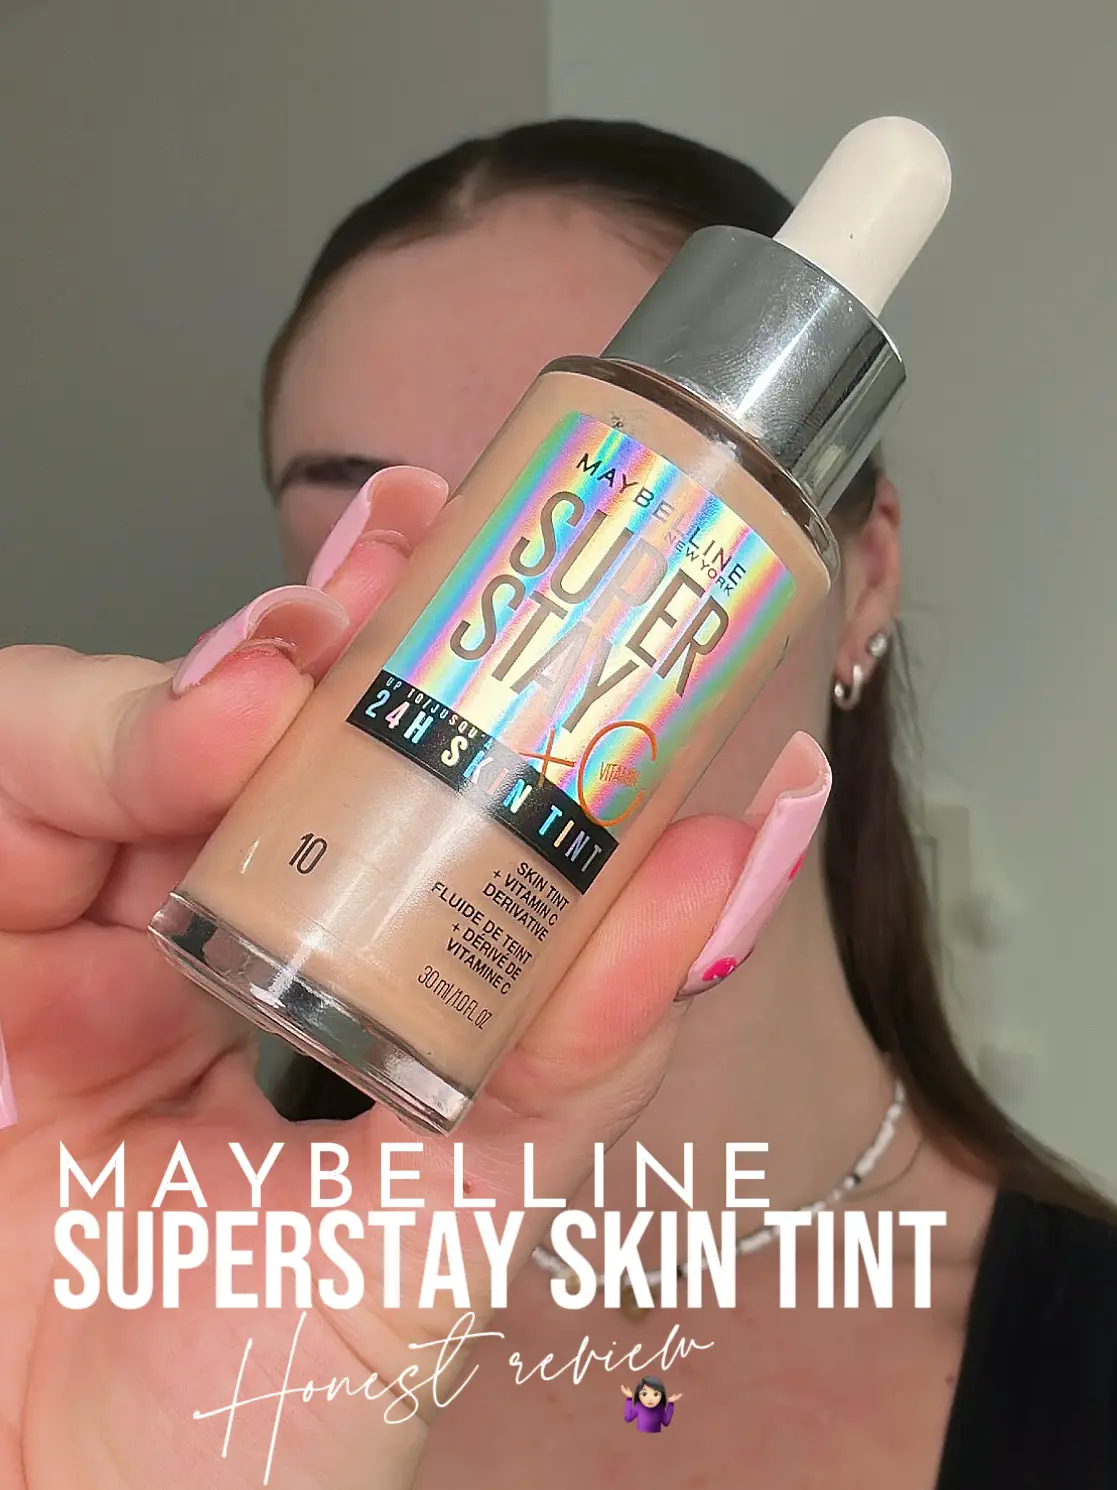 Super Stay Skin Tint + Vitamin C 24H South Korea